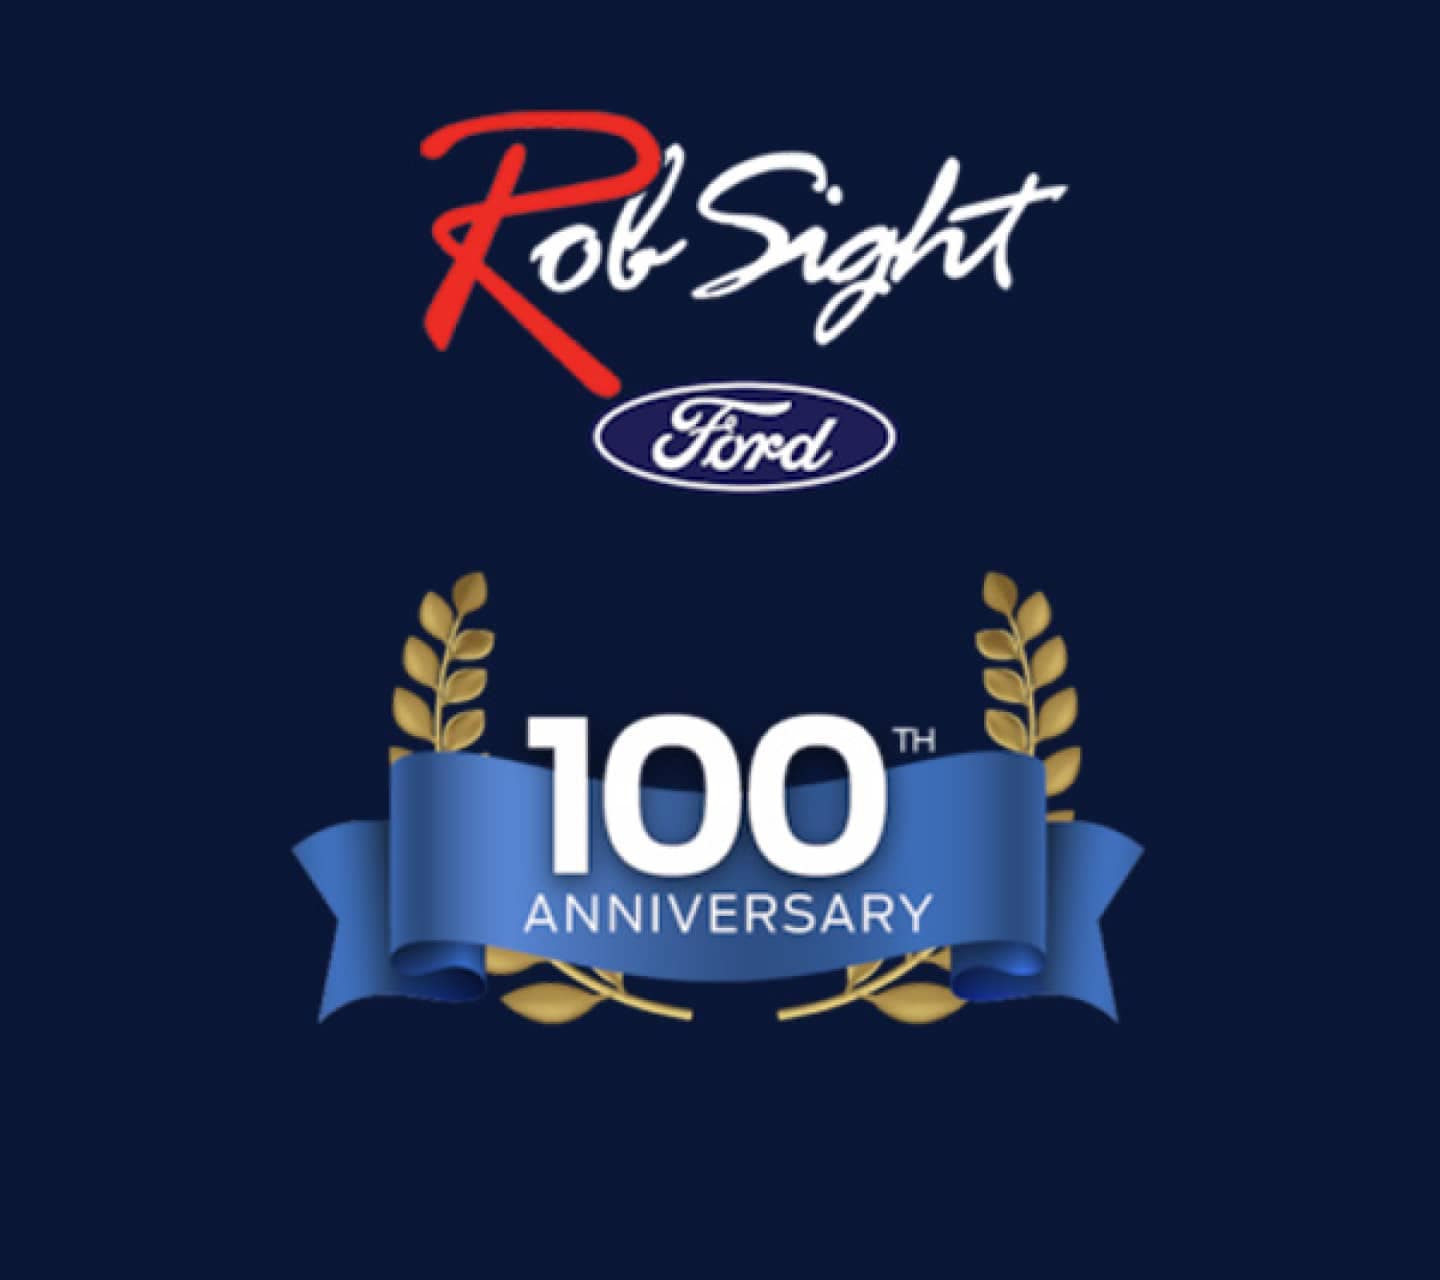 Rob Sight Ford 100th Anniversary